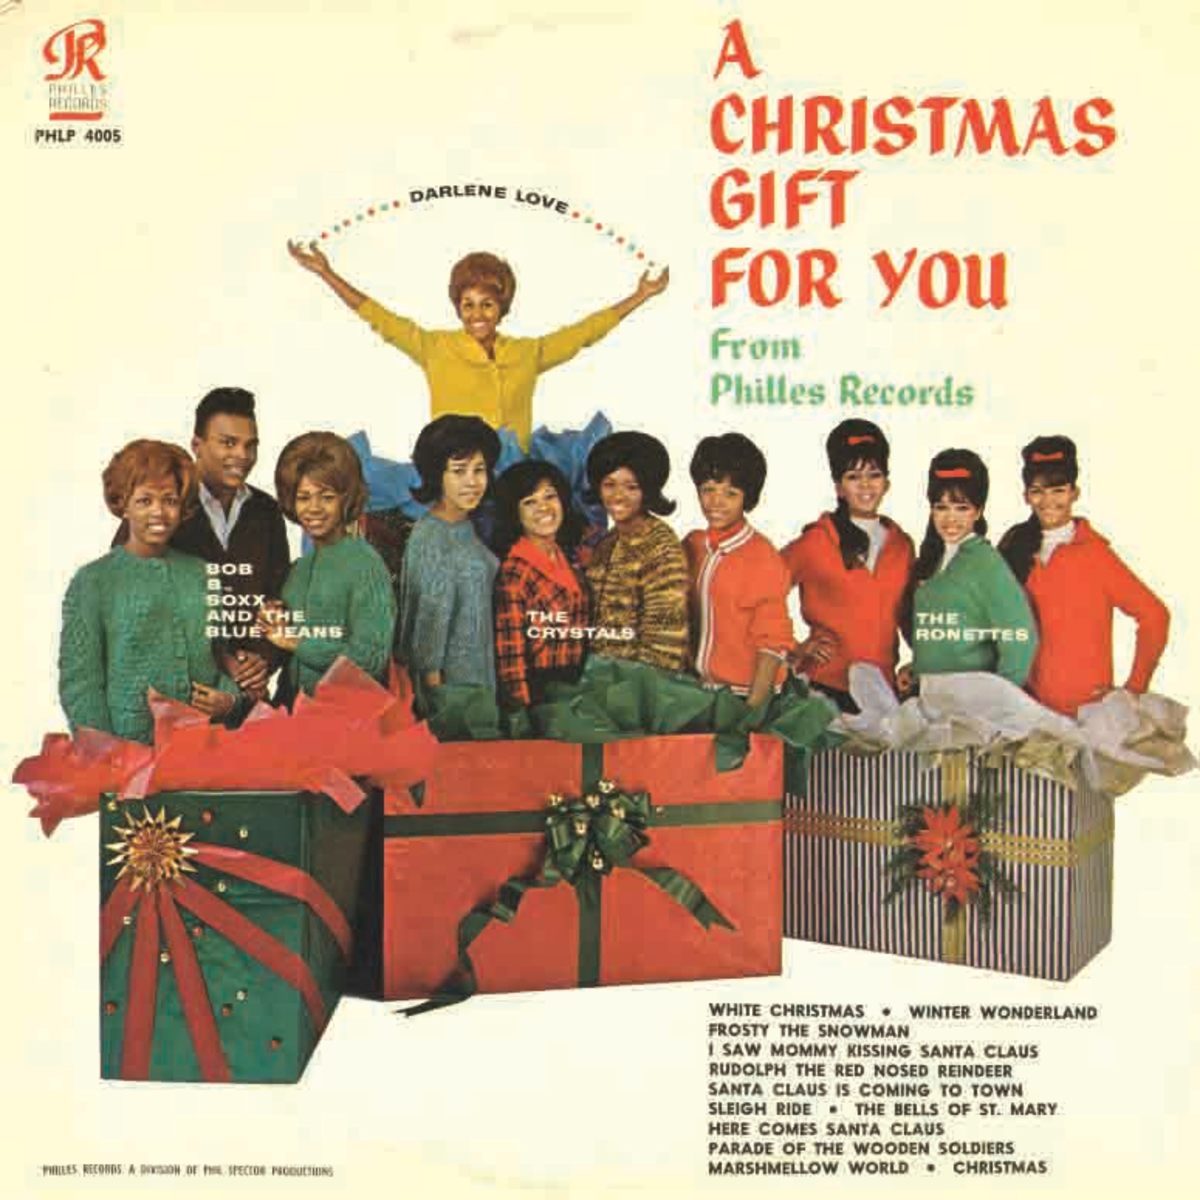 Phil Spector's Christmas album